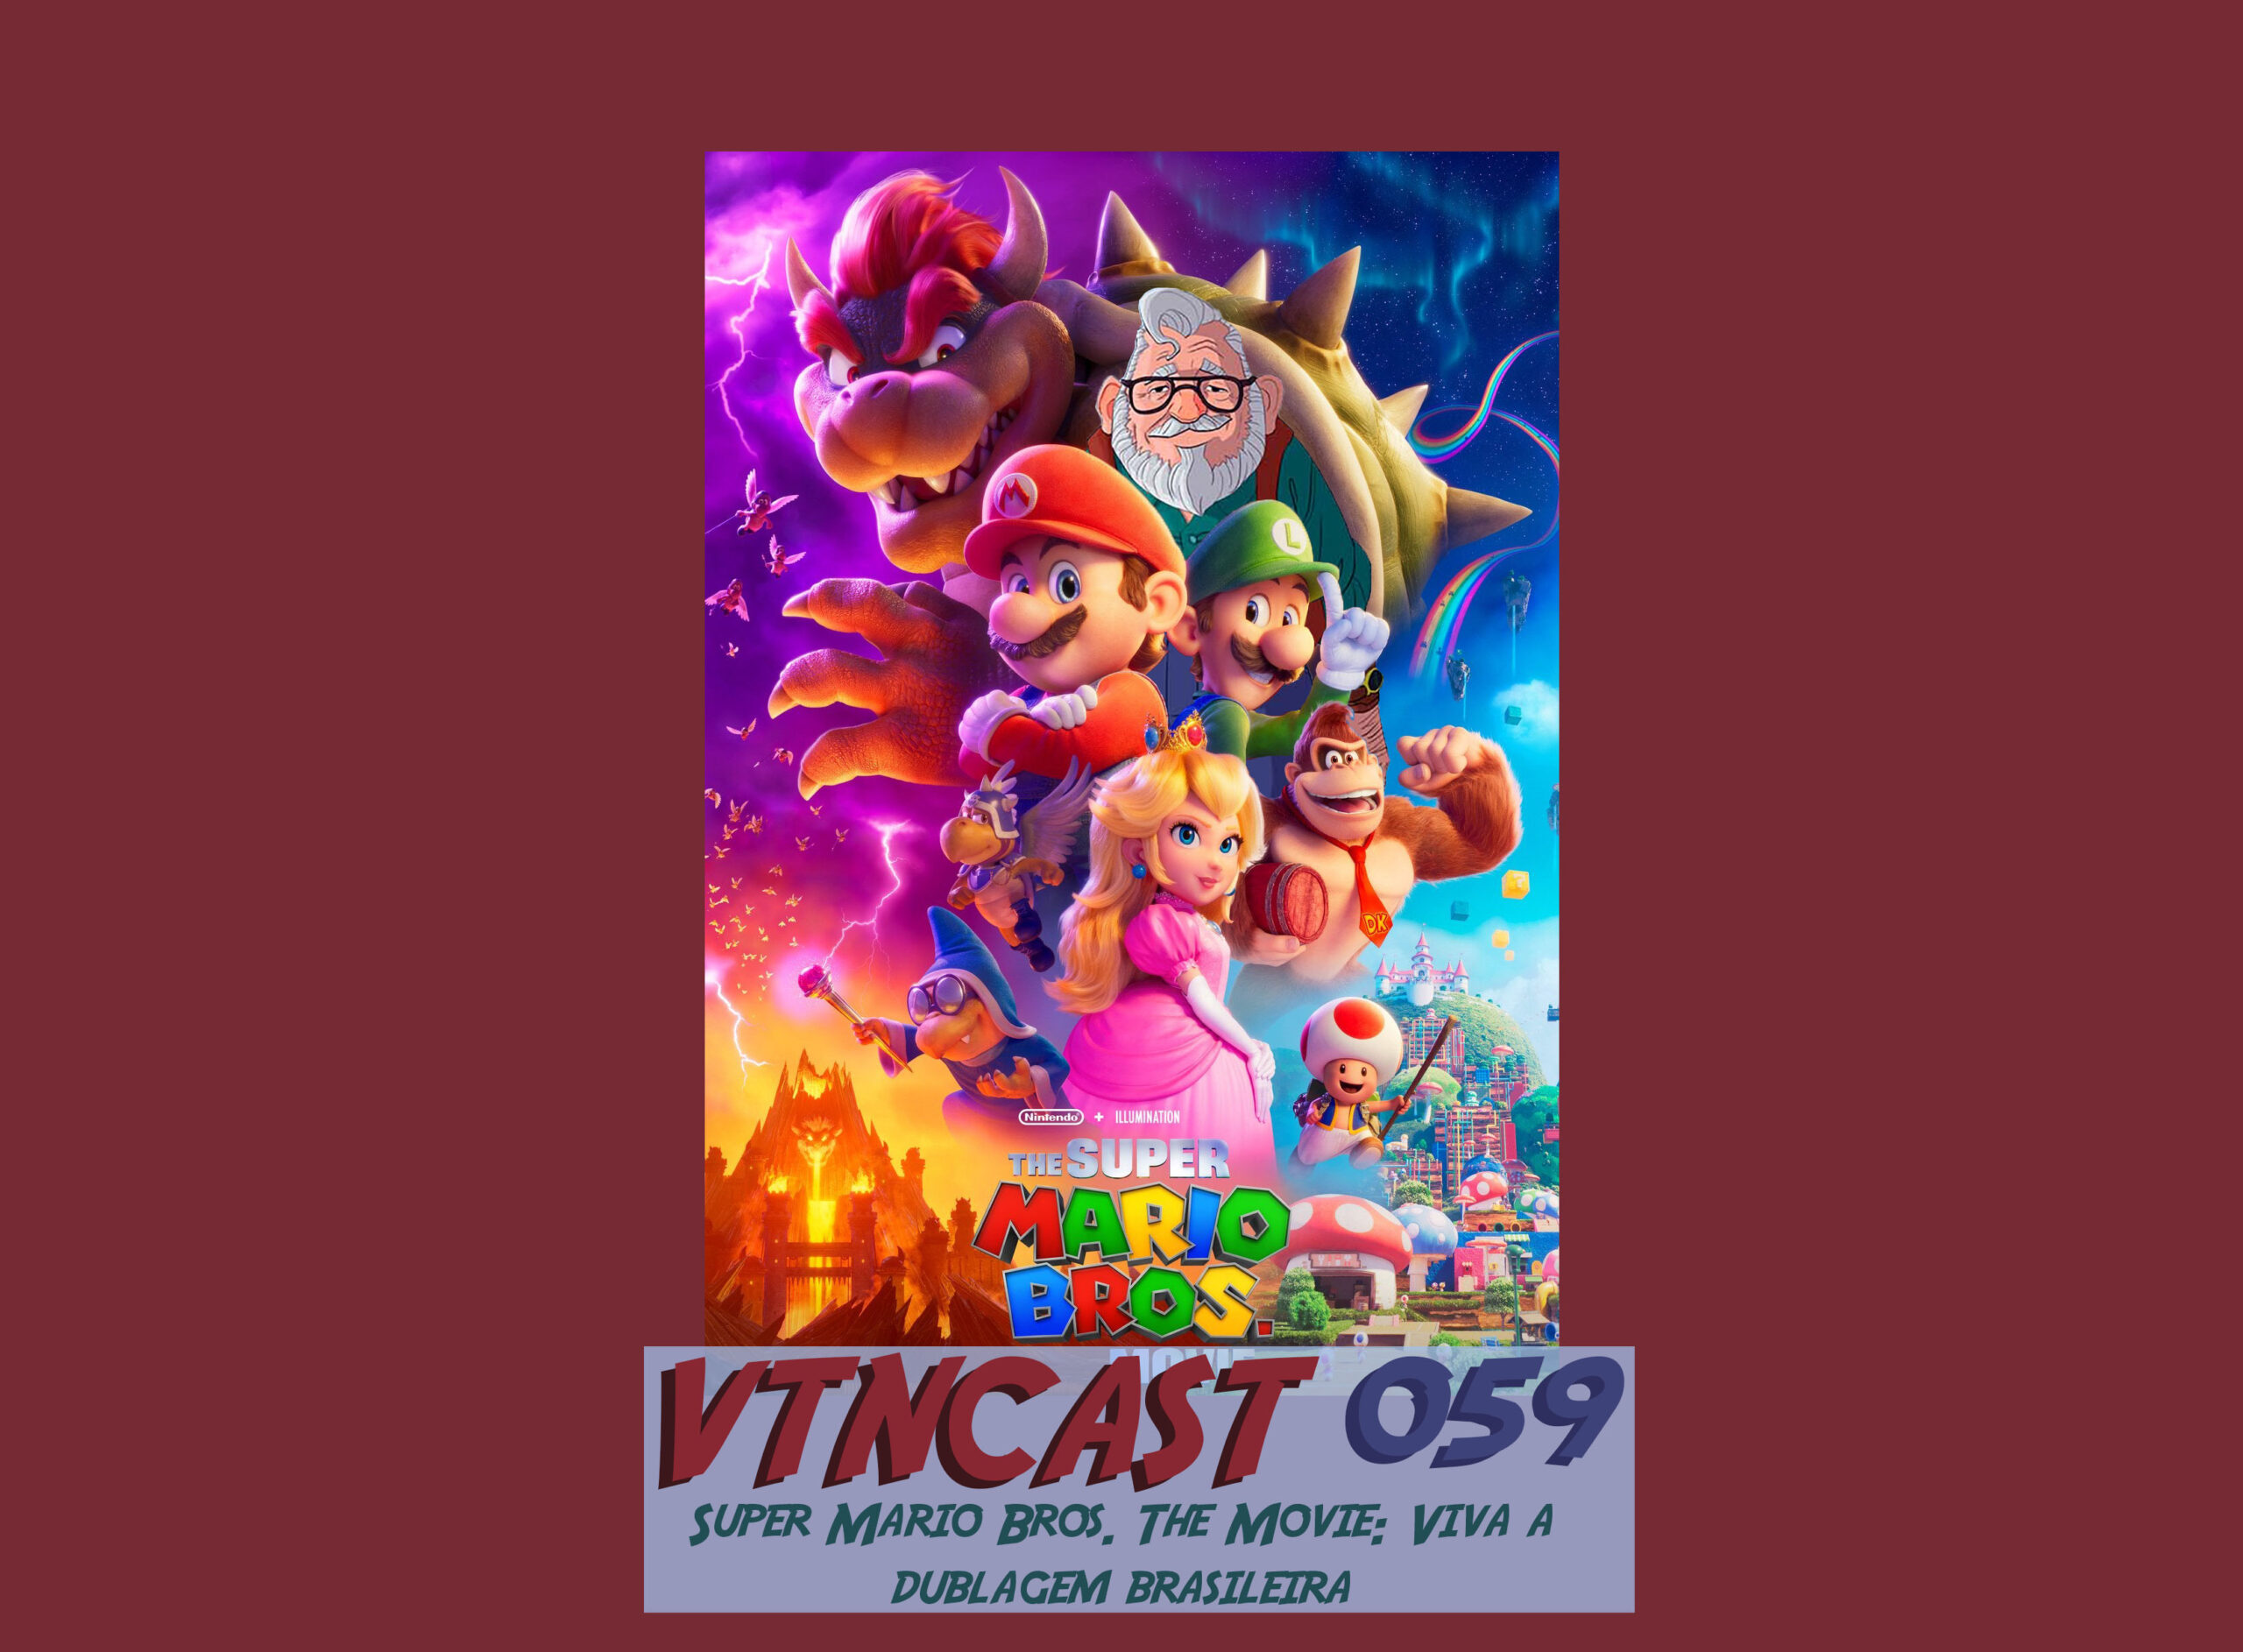 VTNCast 059 – Super Mario Bros. The Movie: viva a dublagem brasileira post thumbnail image